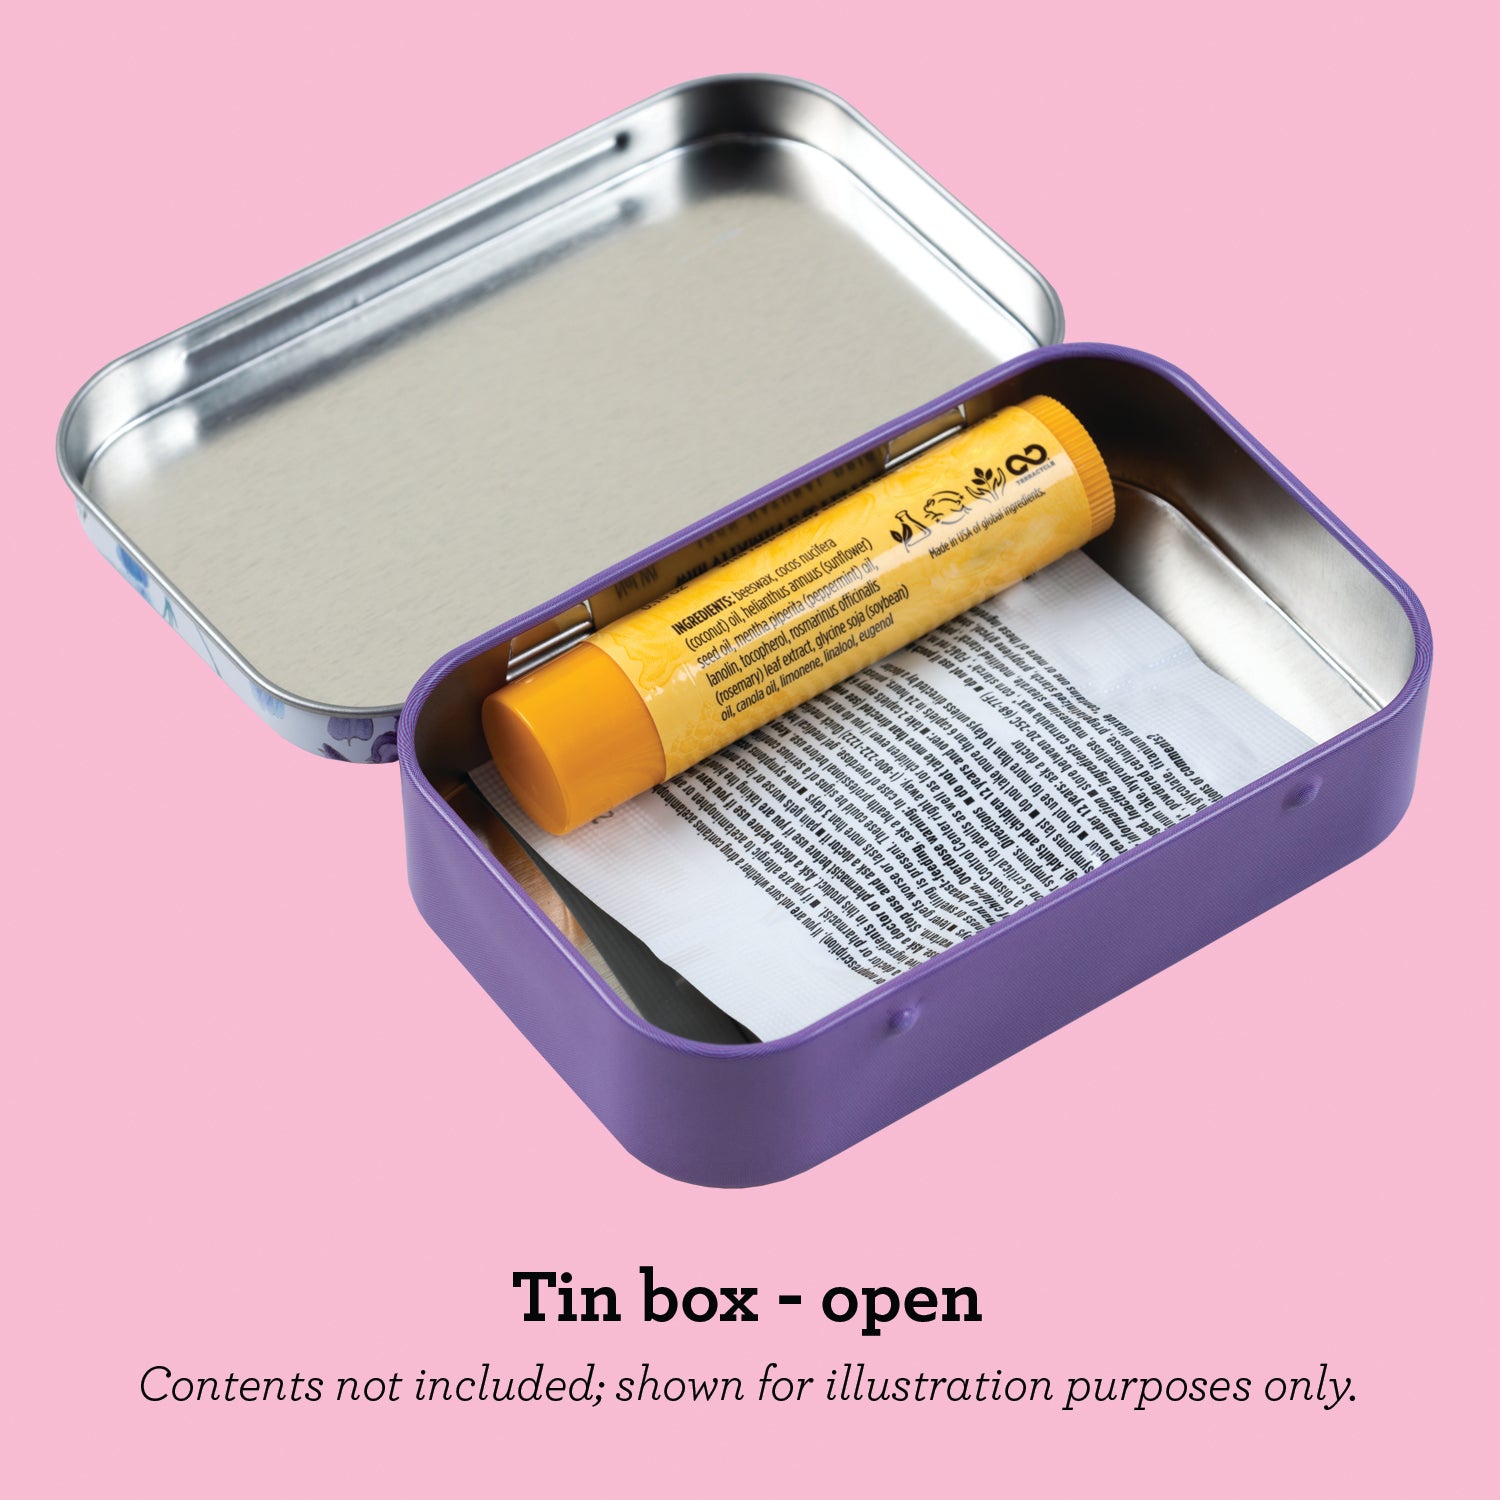 Keep the Fuck Out Stash Tin - purse-size tin box â€“ Bad Grandma Designs